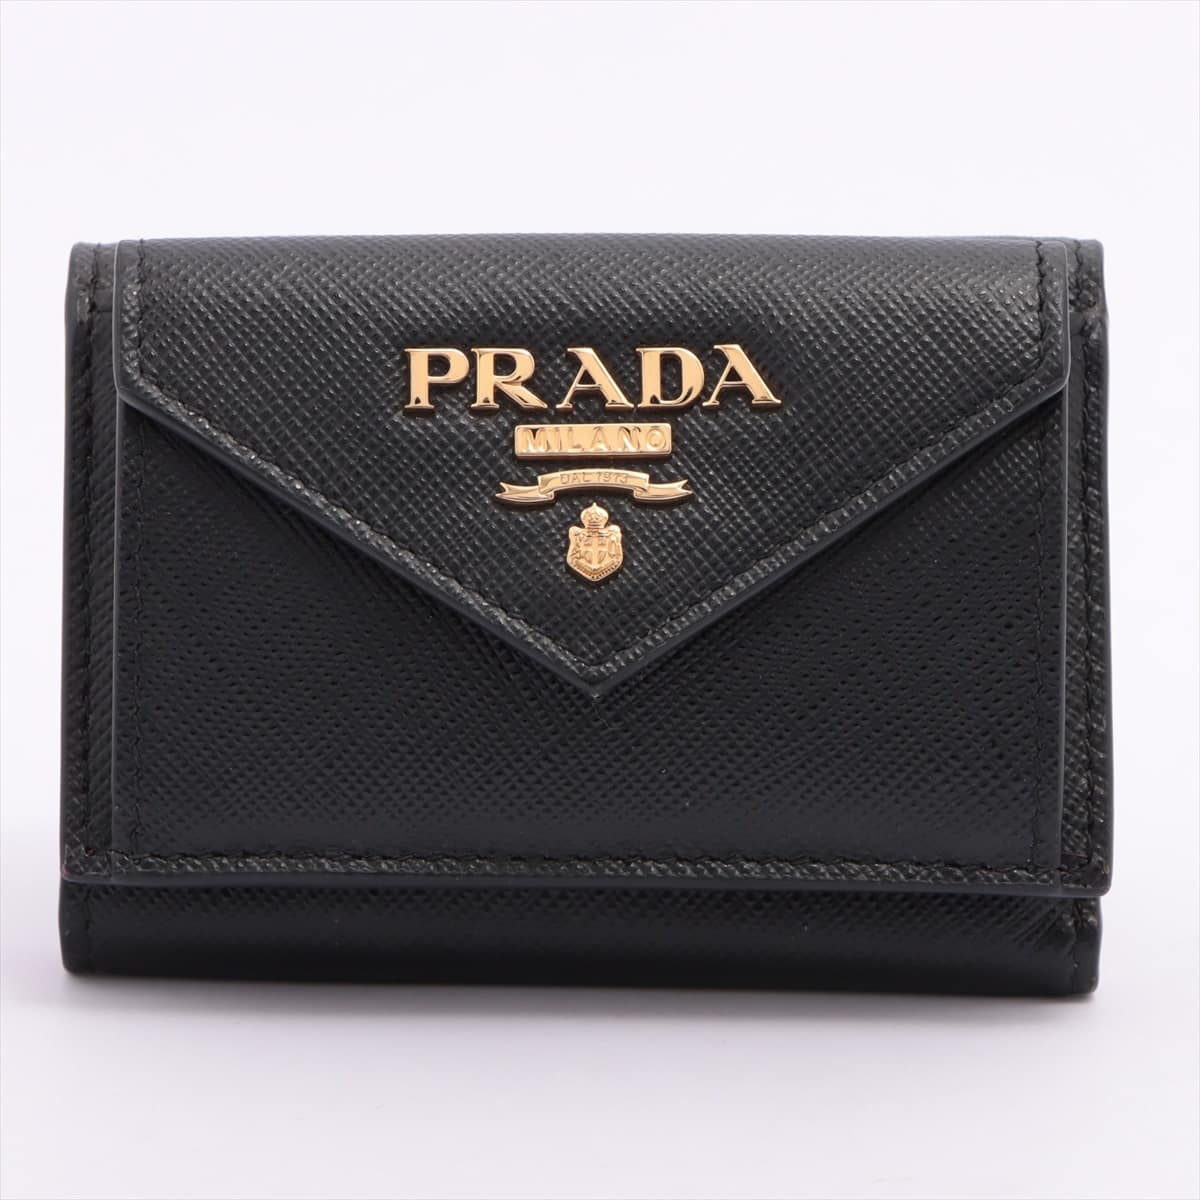 Prada Saffiano Martik 1MH021 Leather Compact Wallet Black